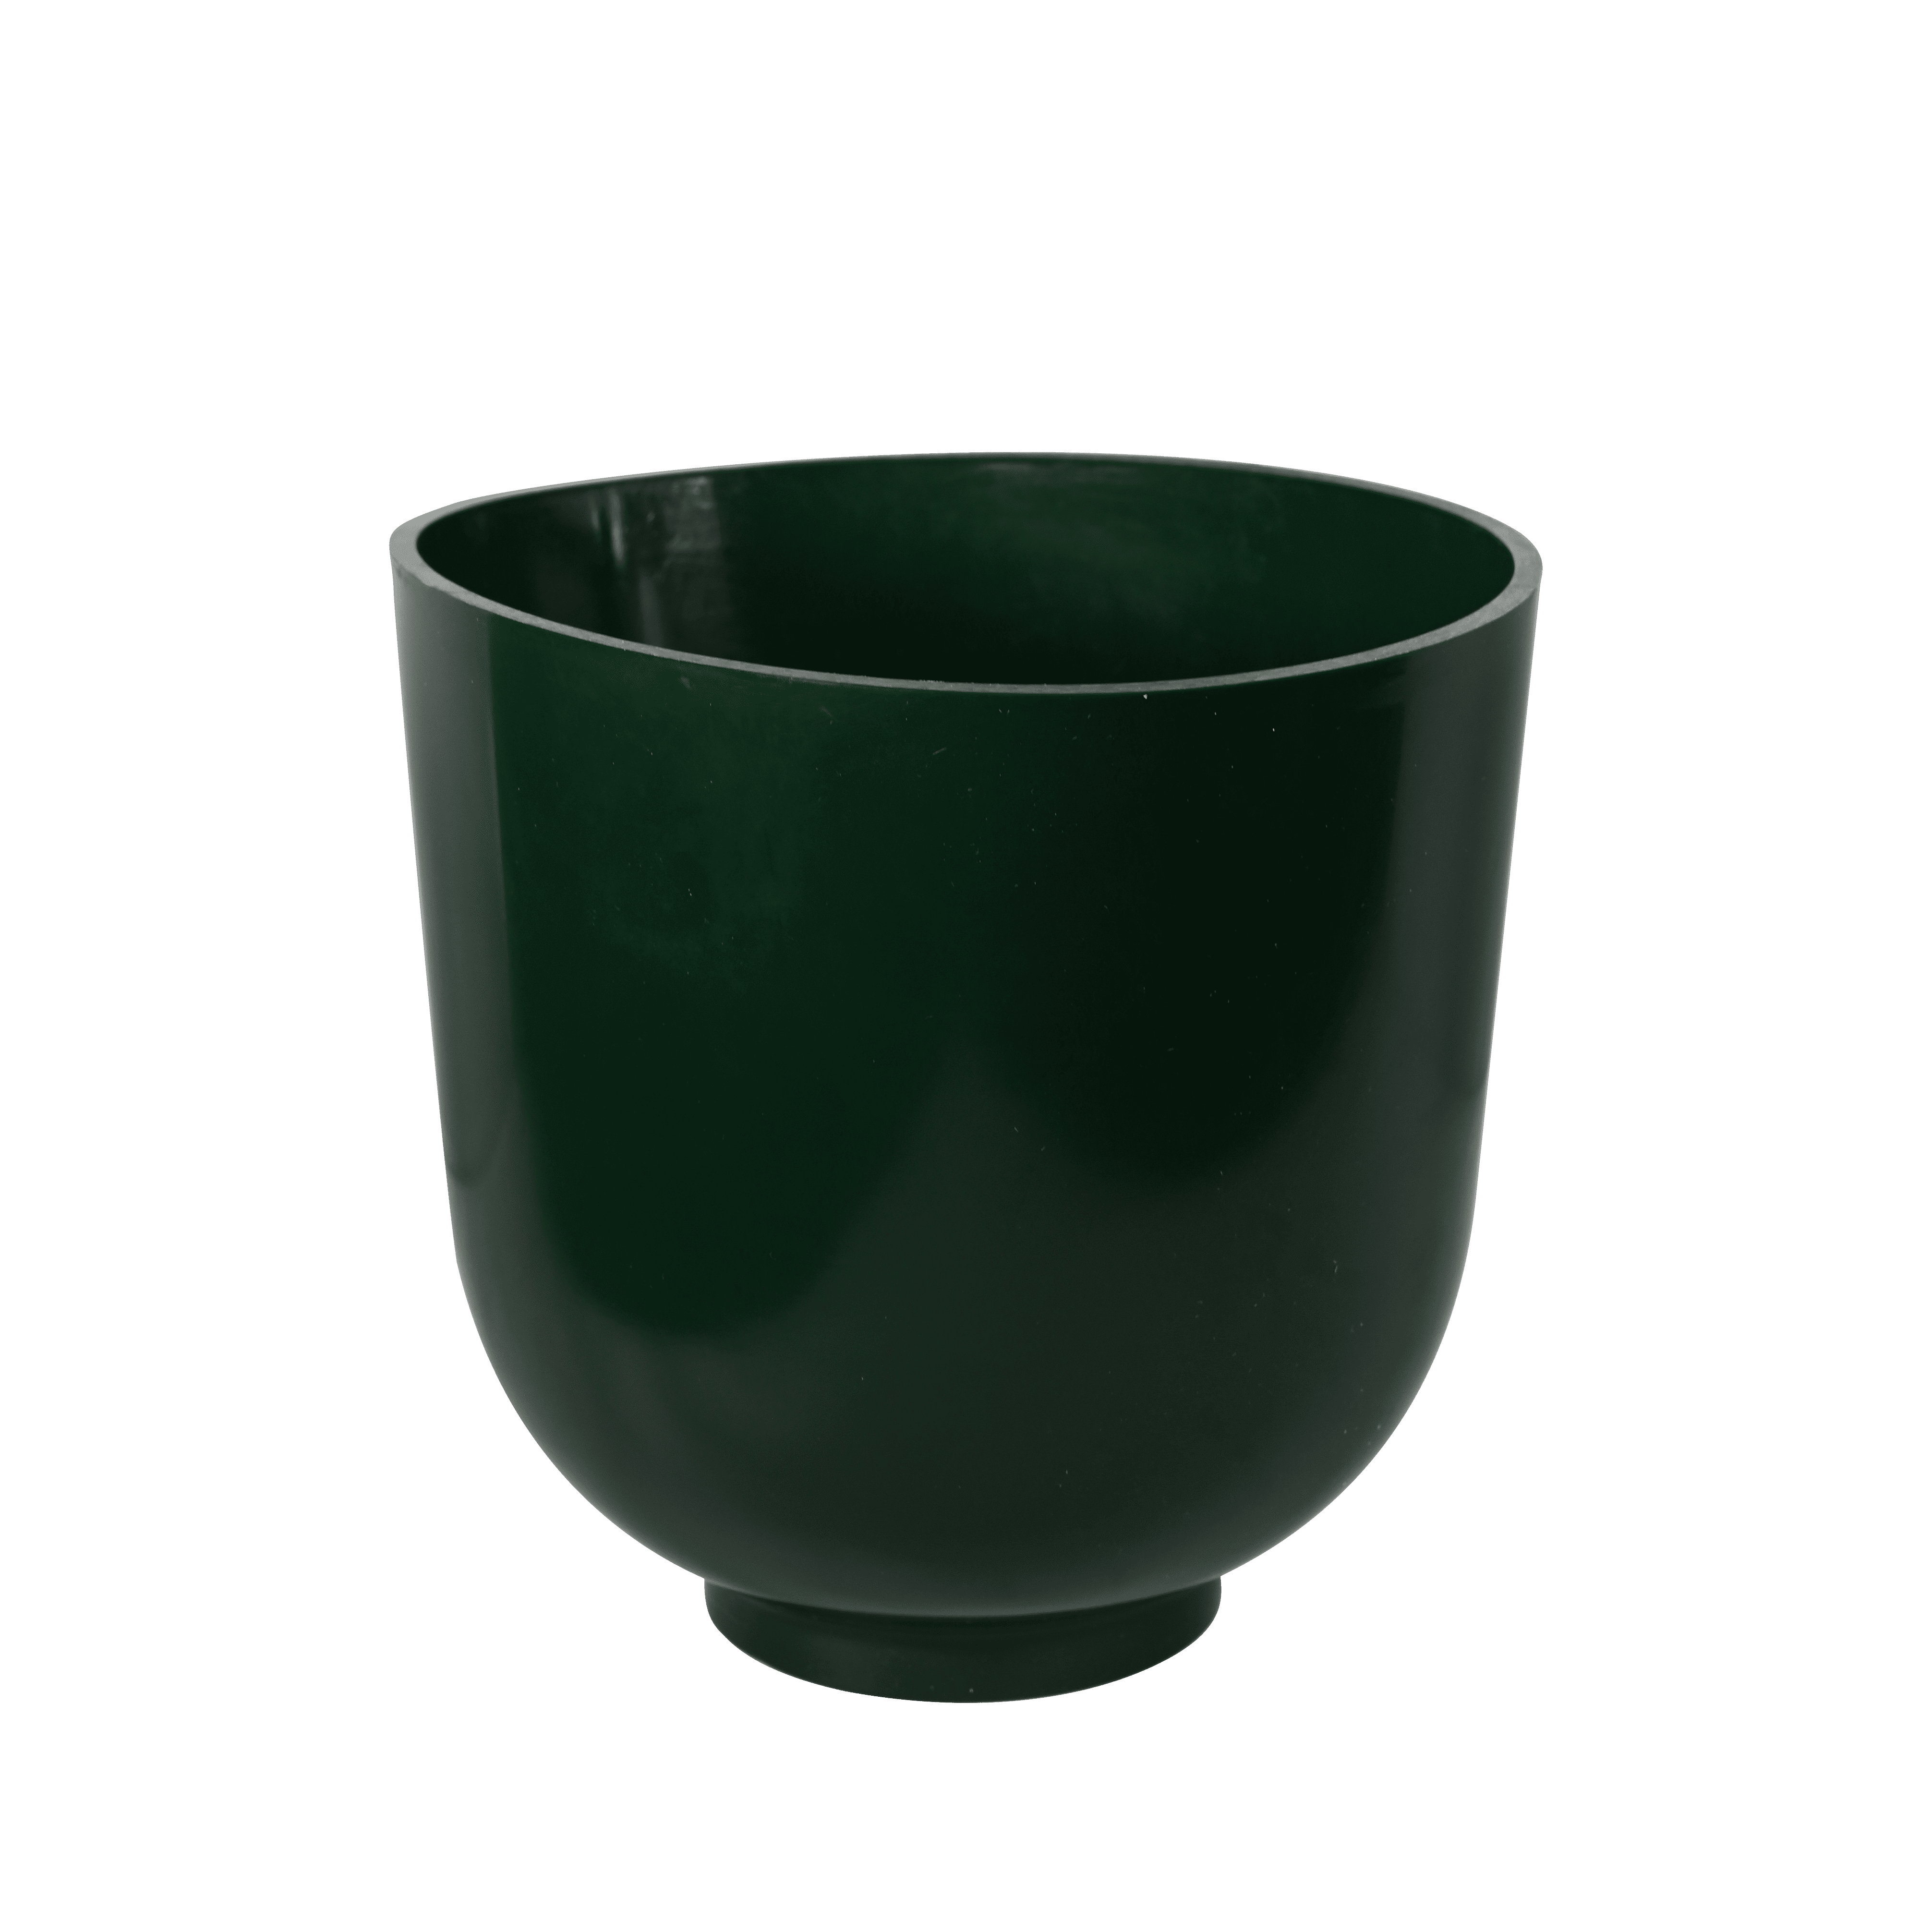 Flexi-Mixing Bowls (Rubber) - Matuska Taxidermy Supply Company